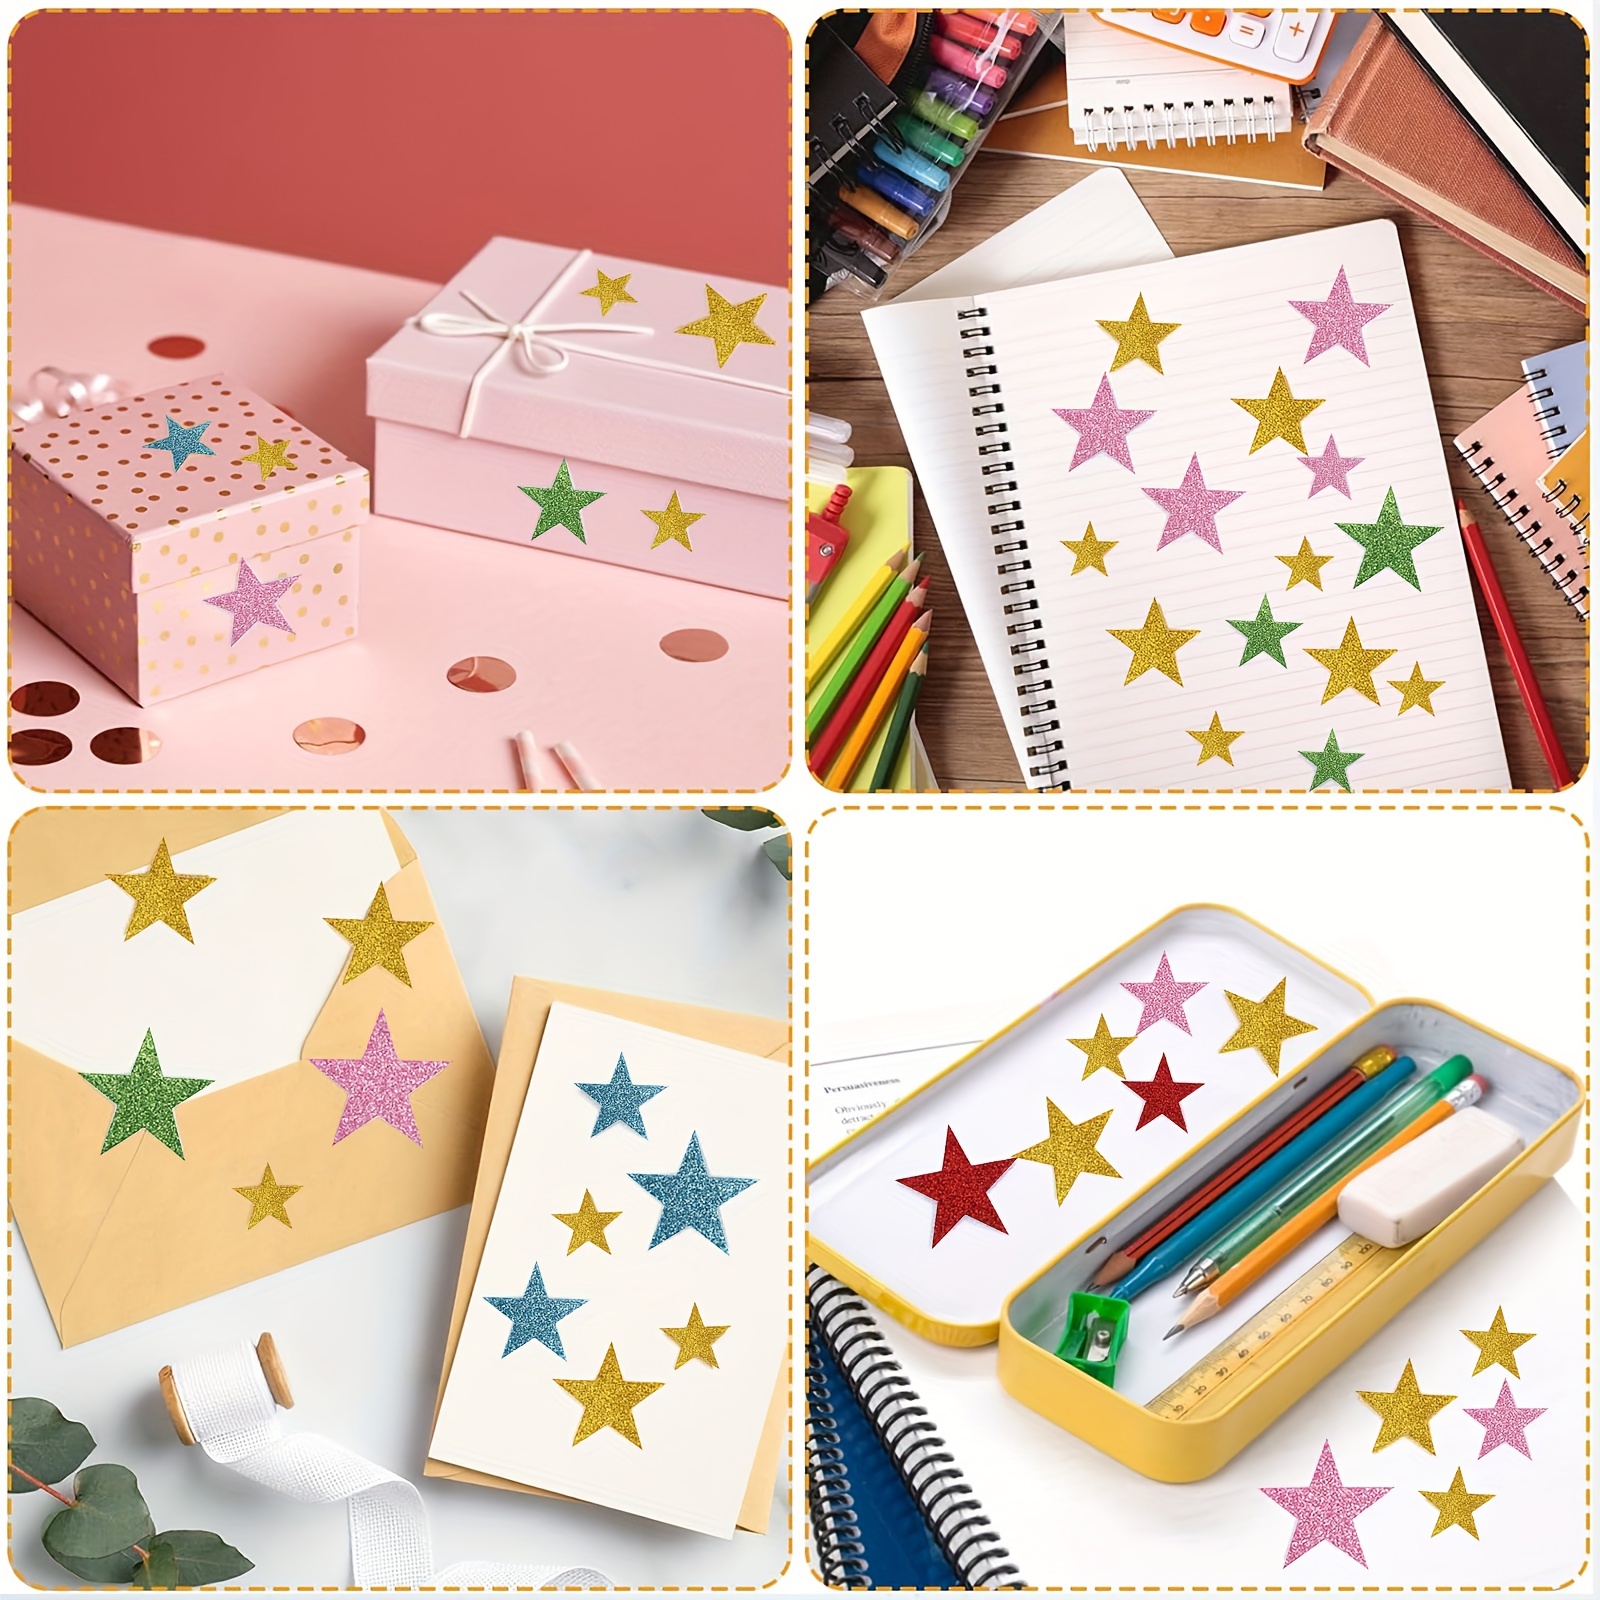 70pcs Glitter Stickers Self-Adhesive Eva Sticker Star Shape Stickers for DIY Classroom Decoration